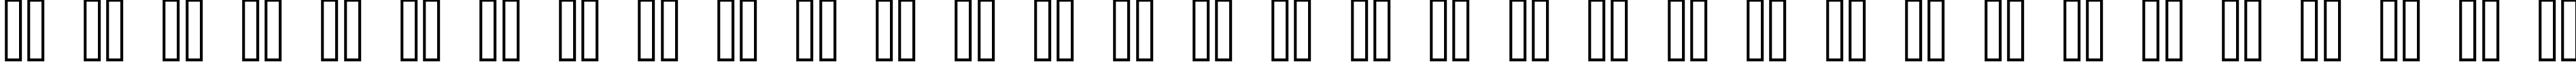 Пример написания русского алфавита шрифтом mono 07_55